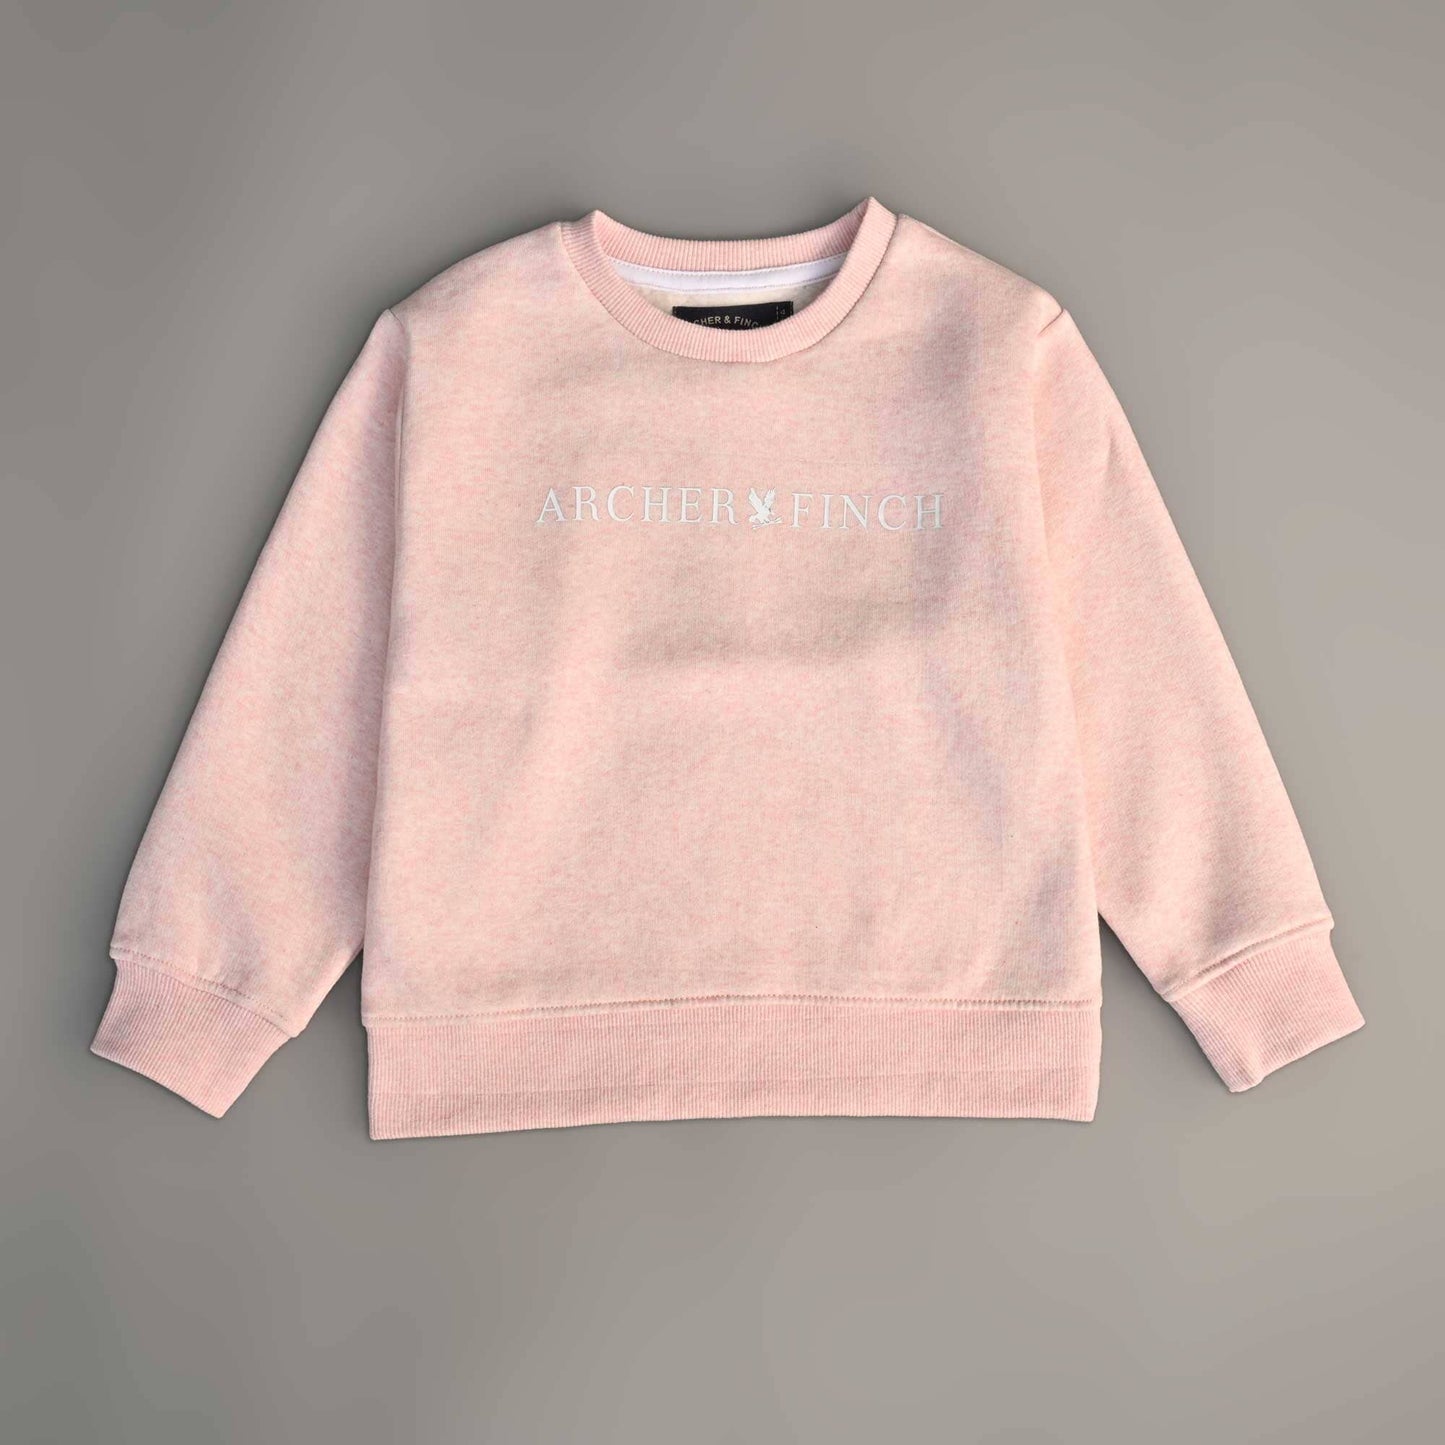 A&F Boy's Archer & Finch Printed Fleece Sweat Shirt Boy's Sweat Shirt LFS Powder Pink 3-4 Years 